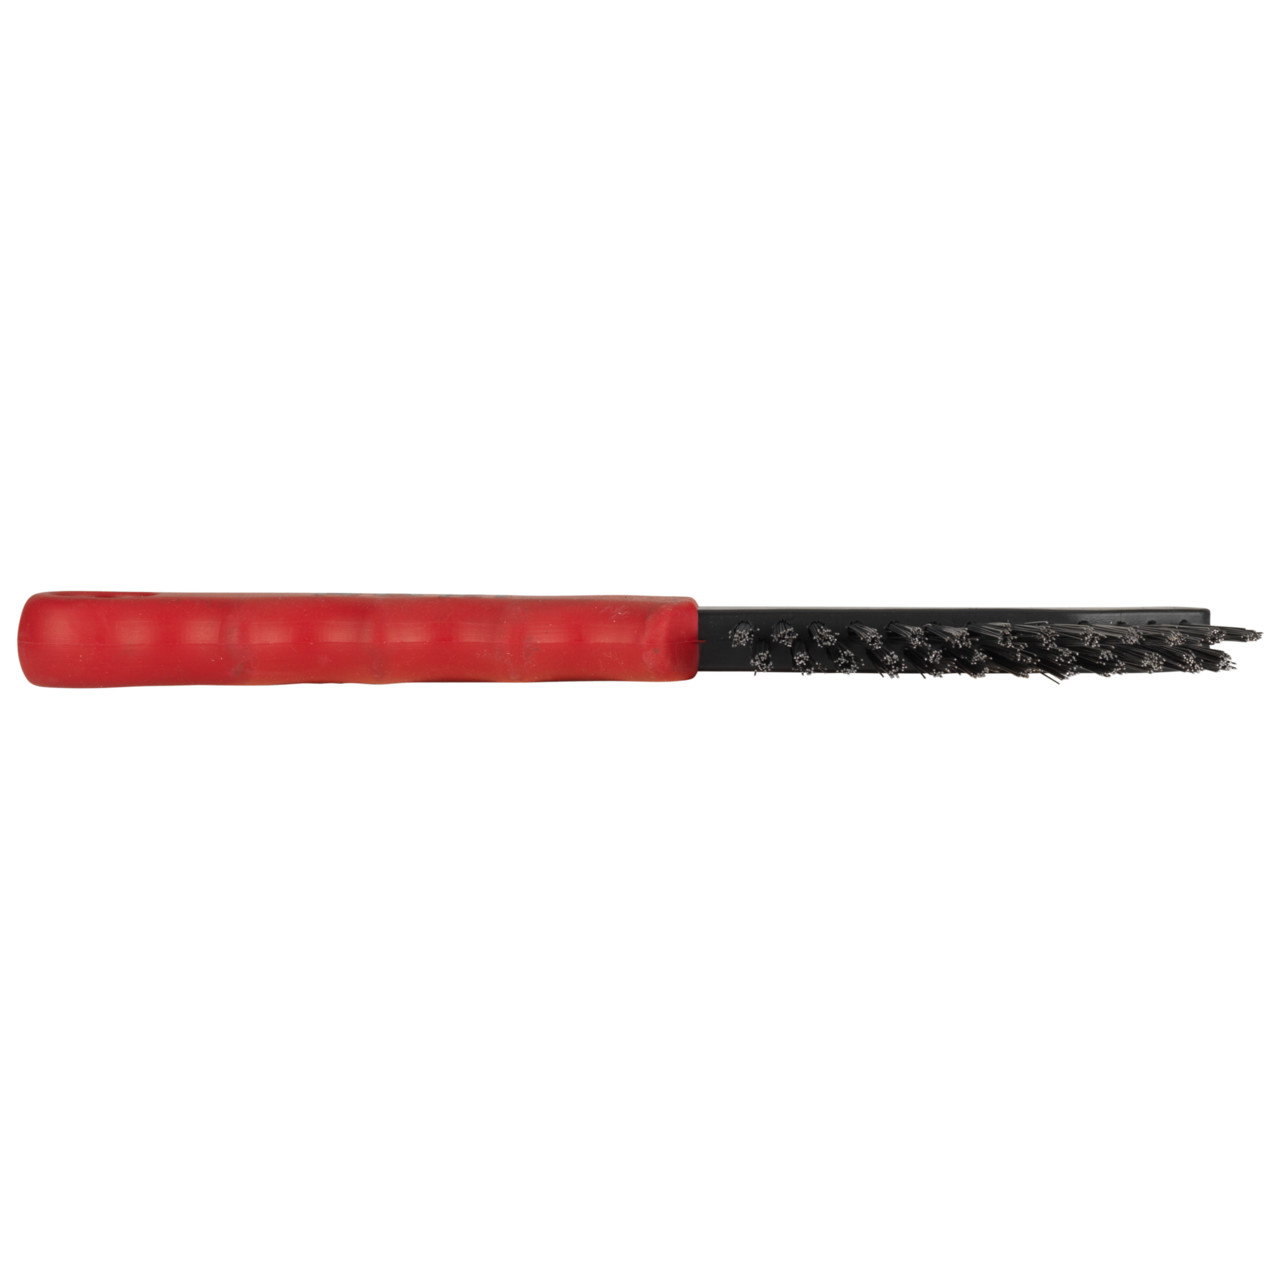 TYROLIT spazzola per pinze freno BxCxL 225x12x90 Per acciaio, forma: 90HBSDG - (spazzola manuale), Art. 34203494